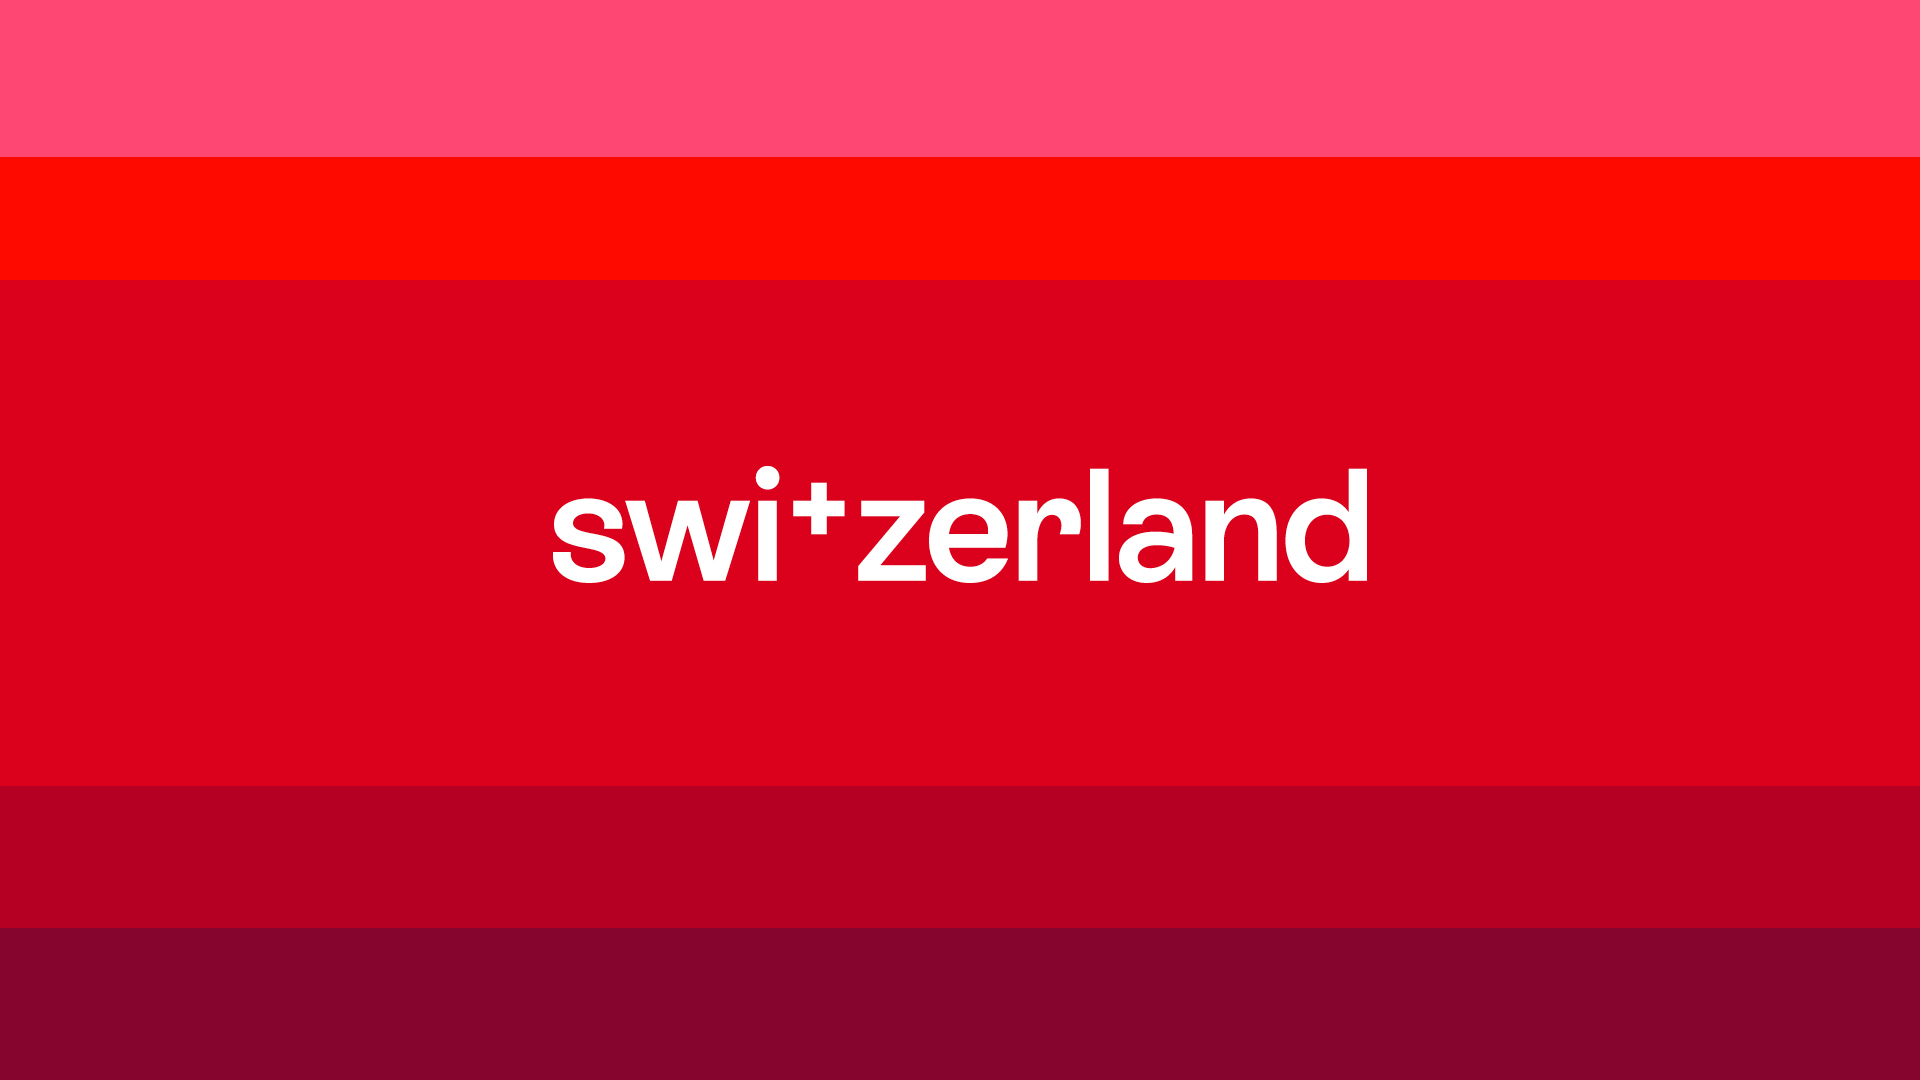 Switzerland New Brand Identity